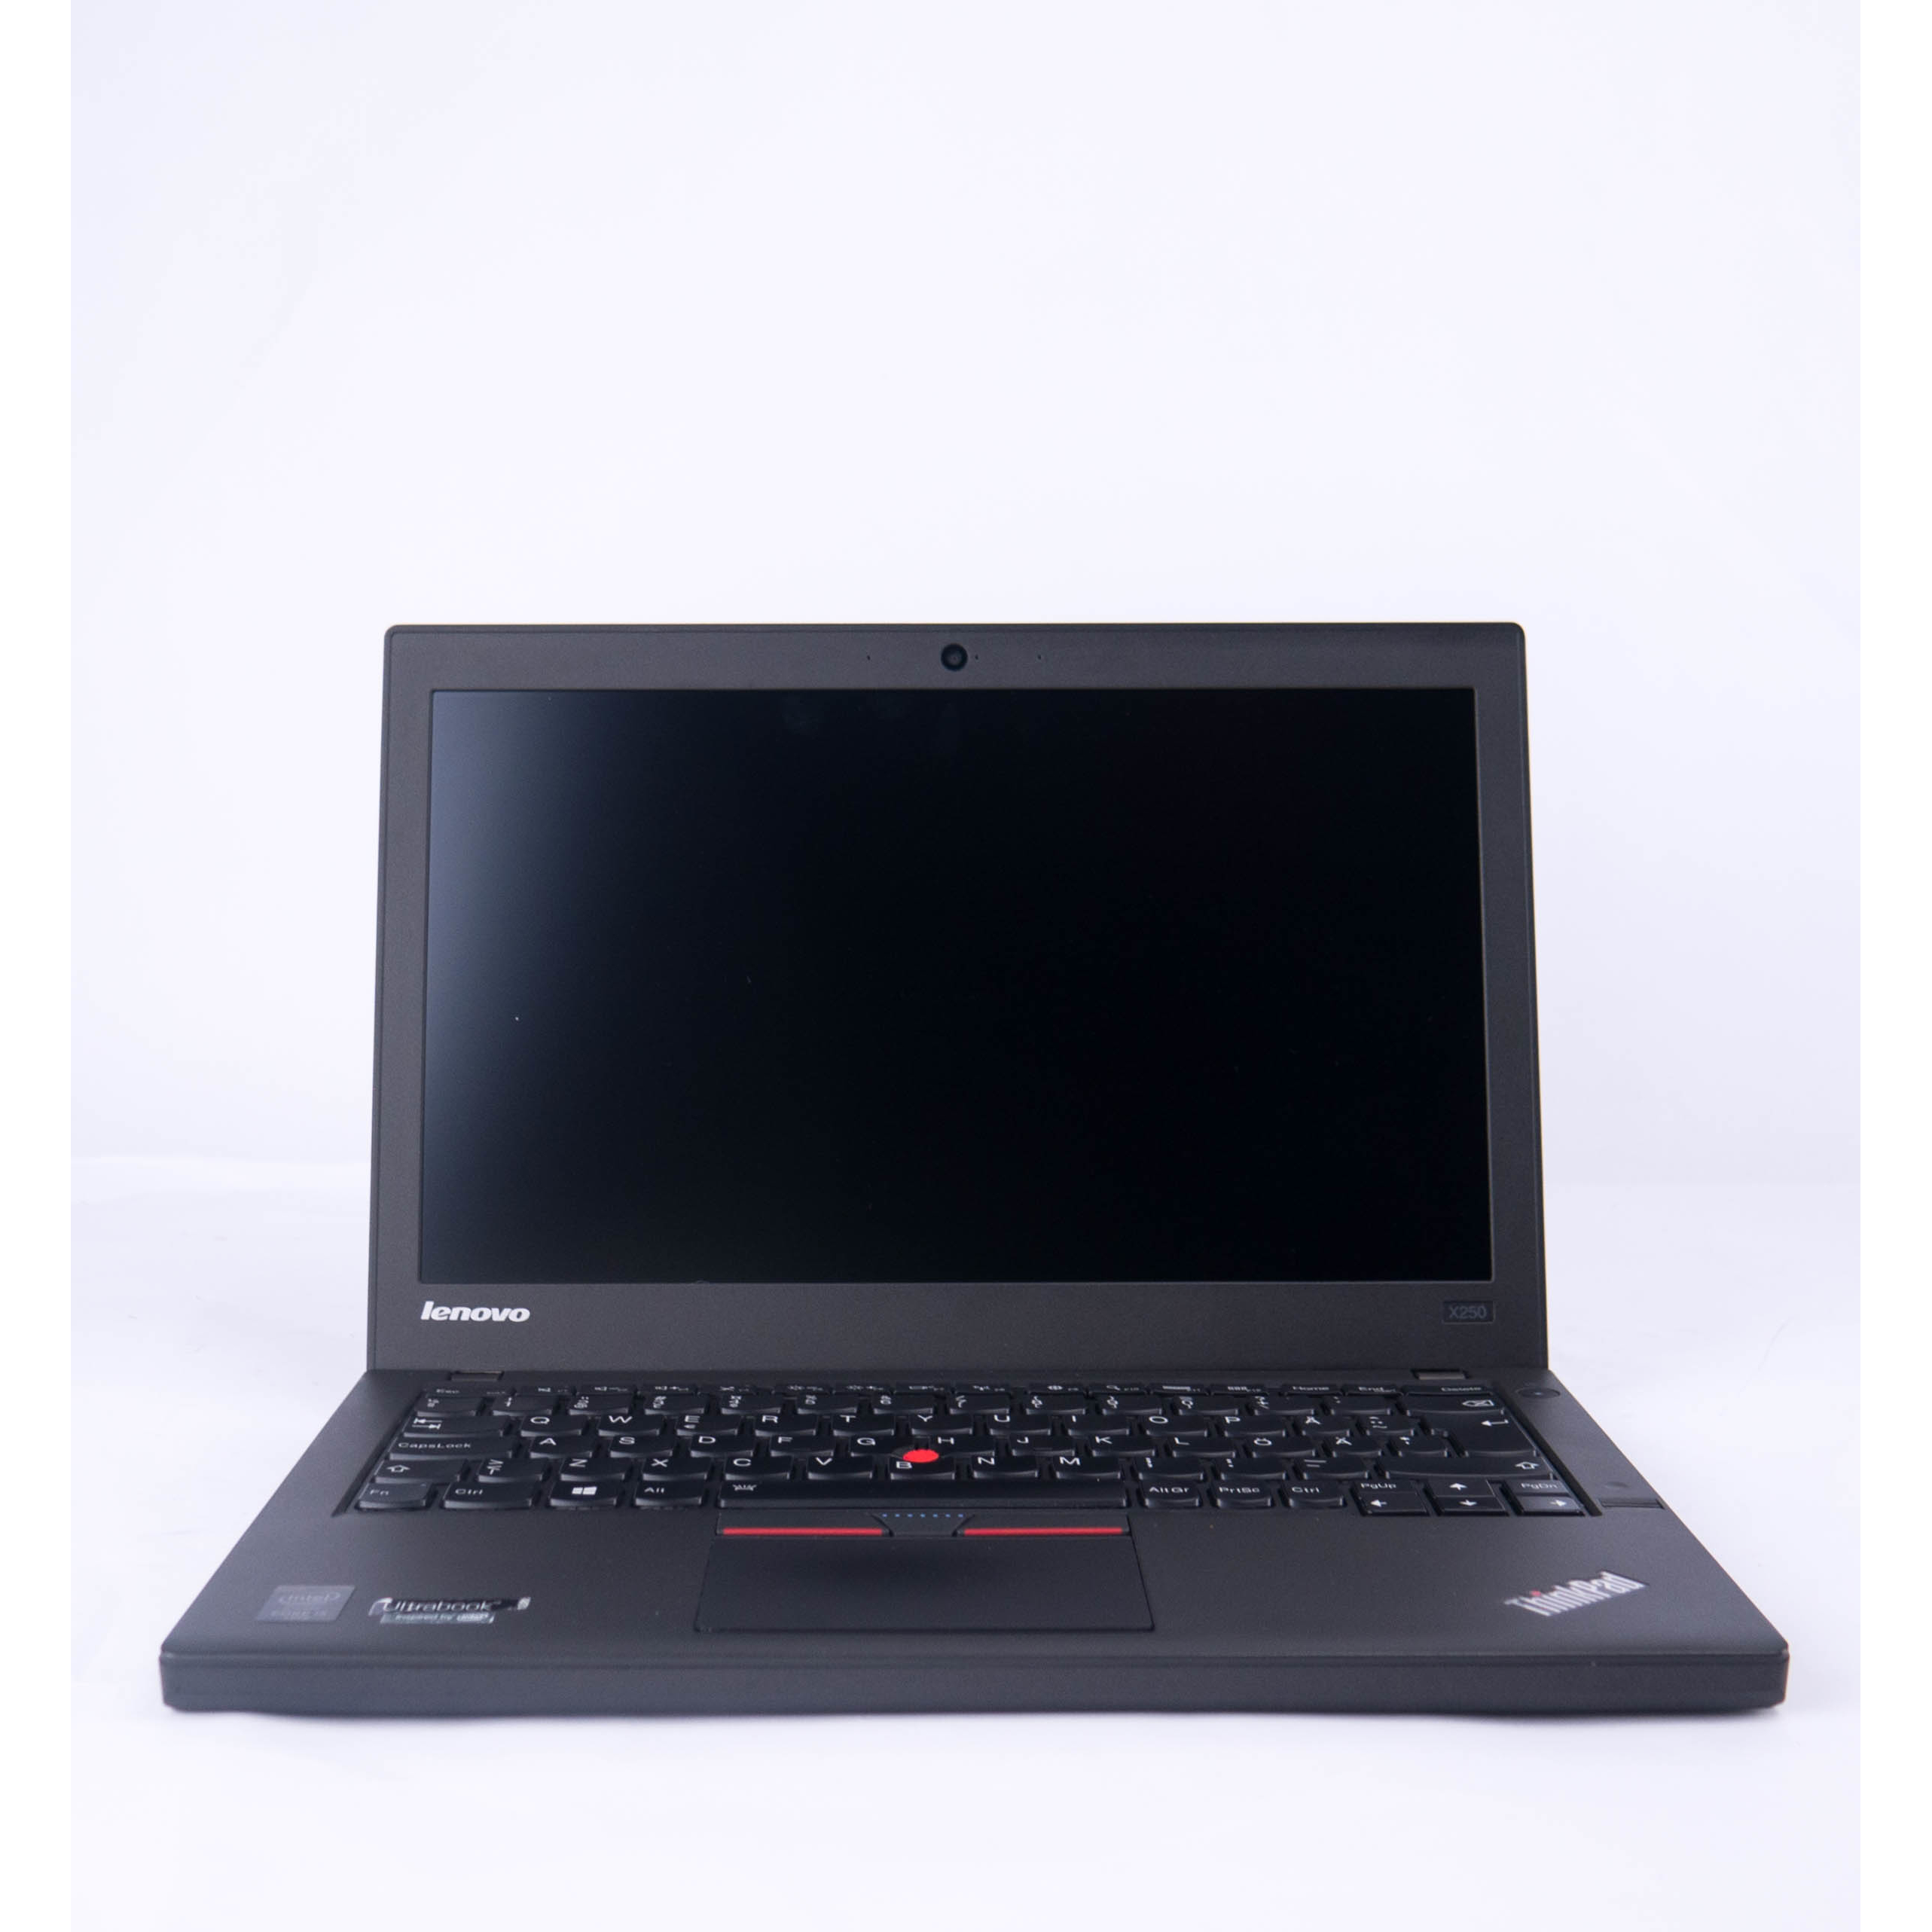 Lenovo ThinkPad X250 i7 | Лаптопи втора ръка | iZone